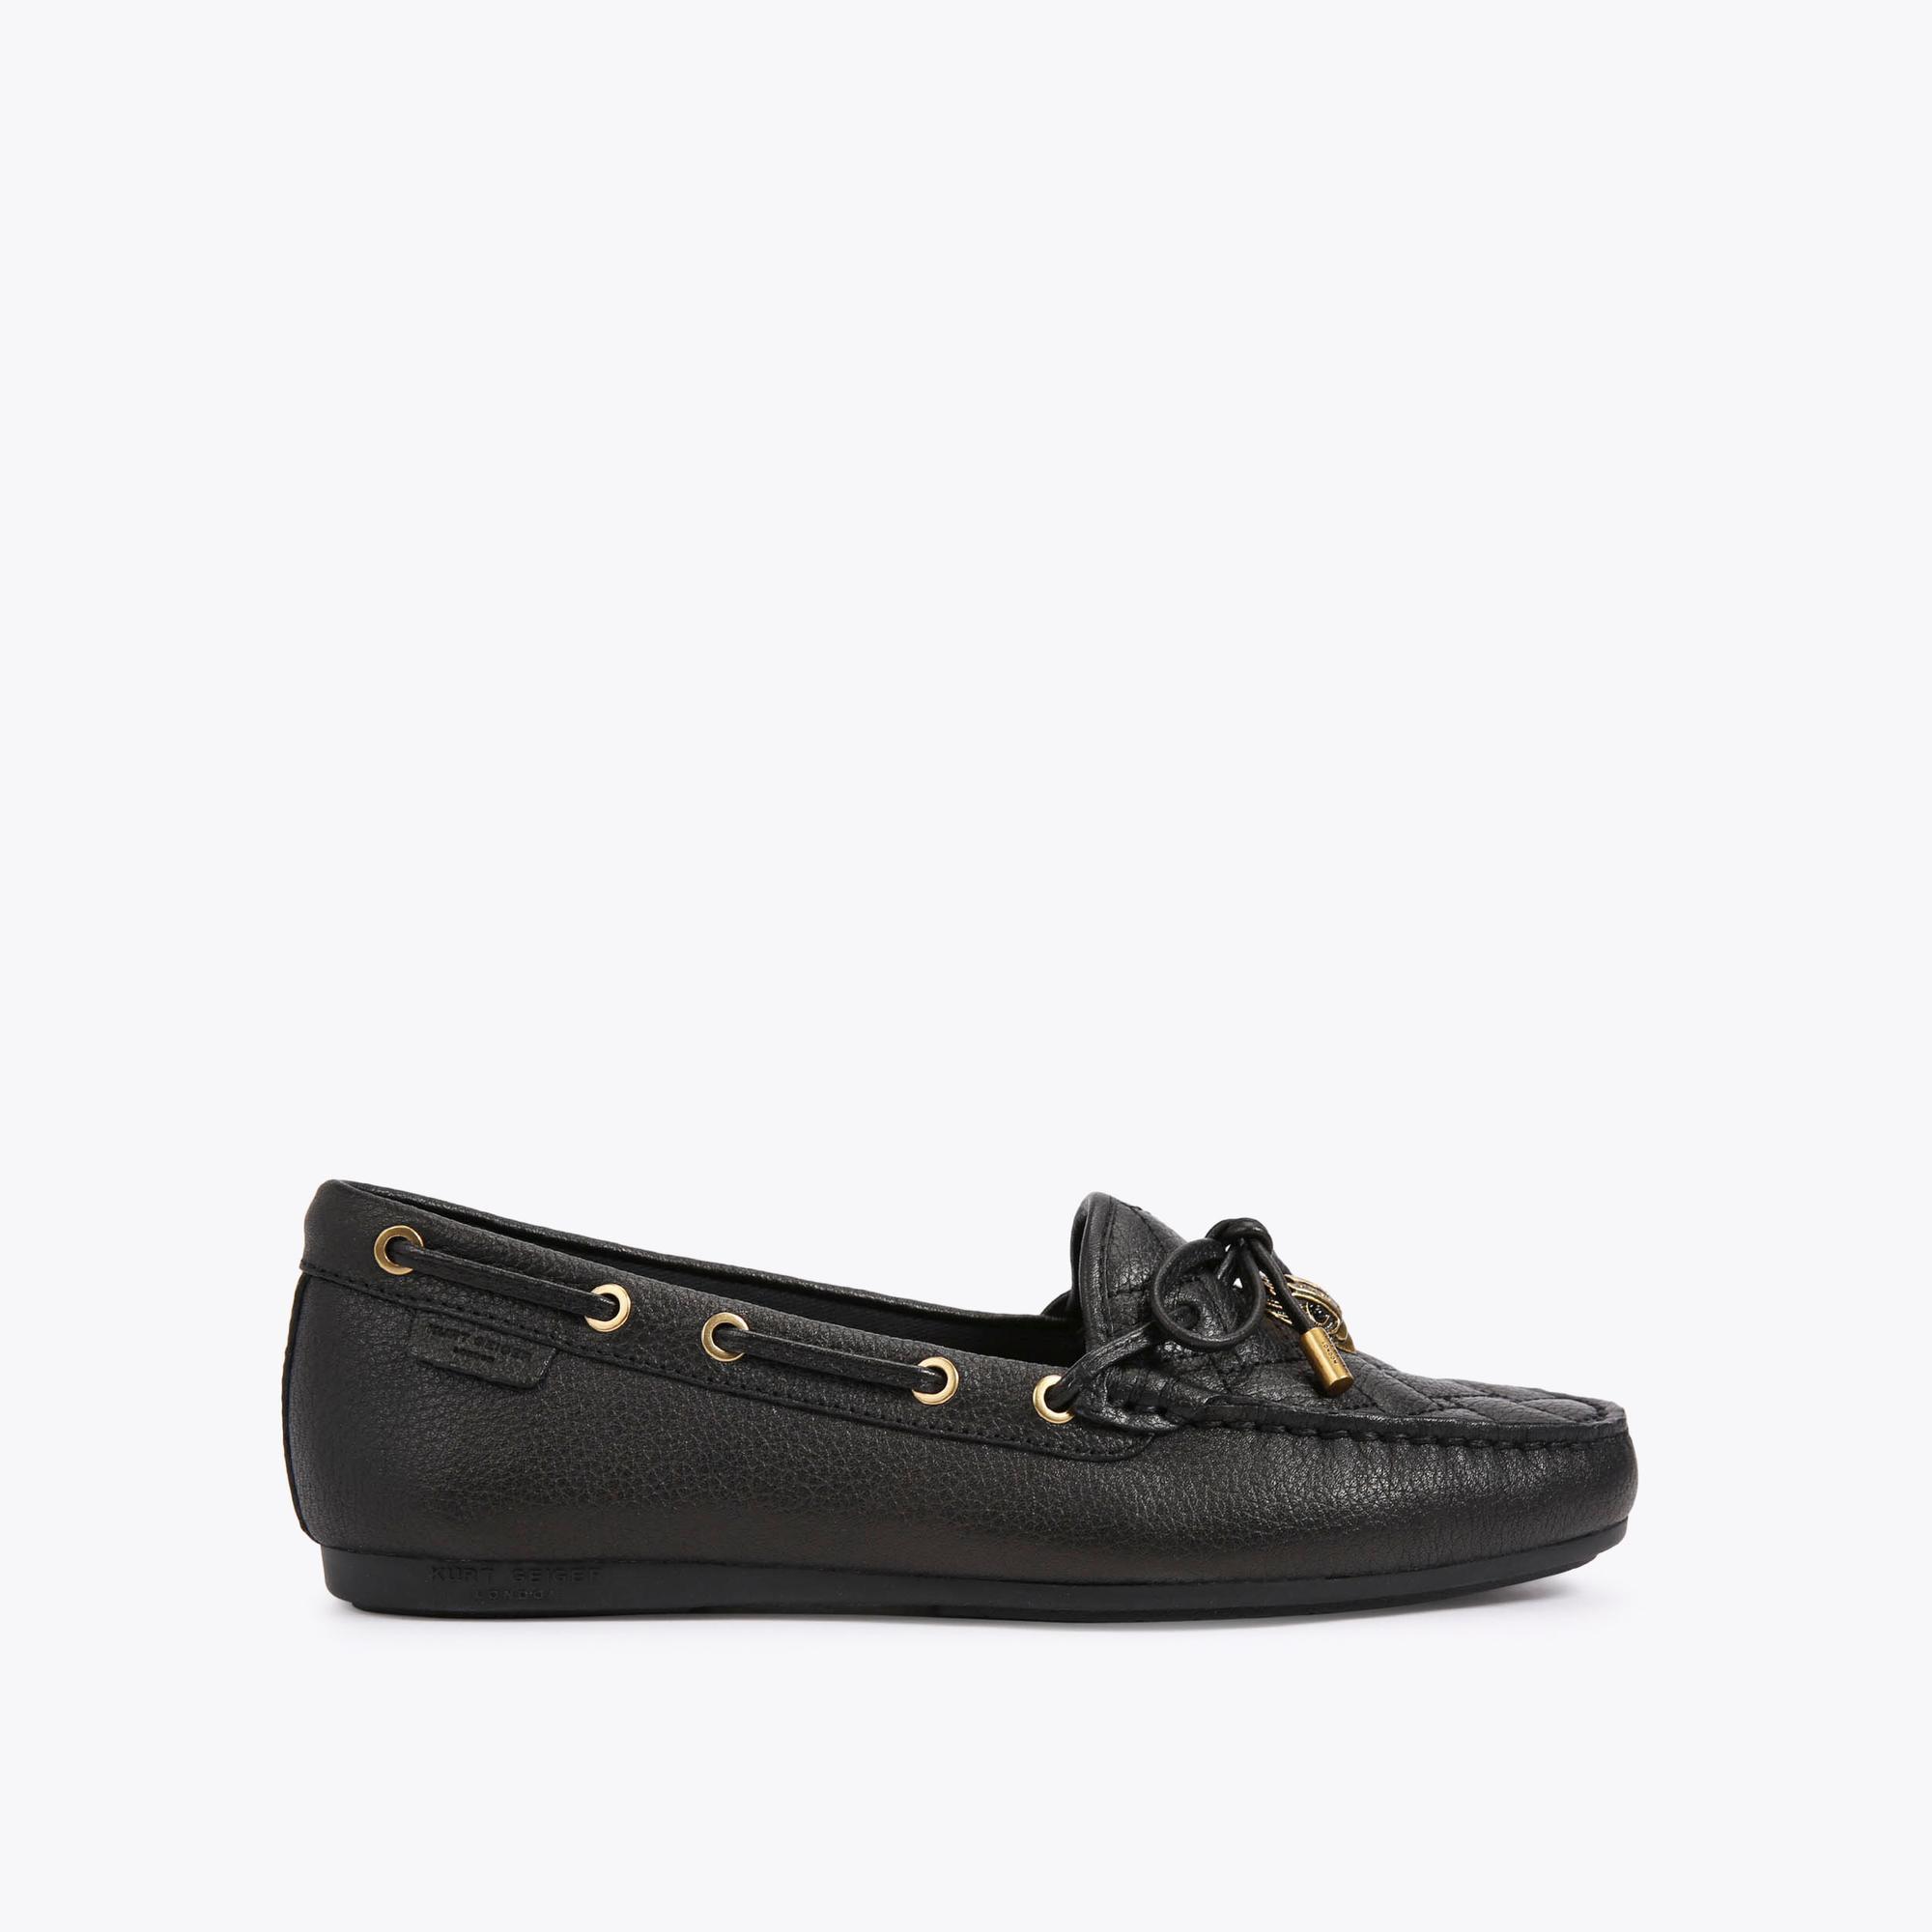 EAGLE MOCCASIN Black Textured Leather Slip On Shoe by KURT GEIGER LONDON